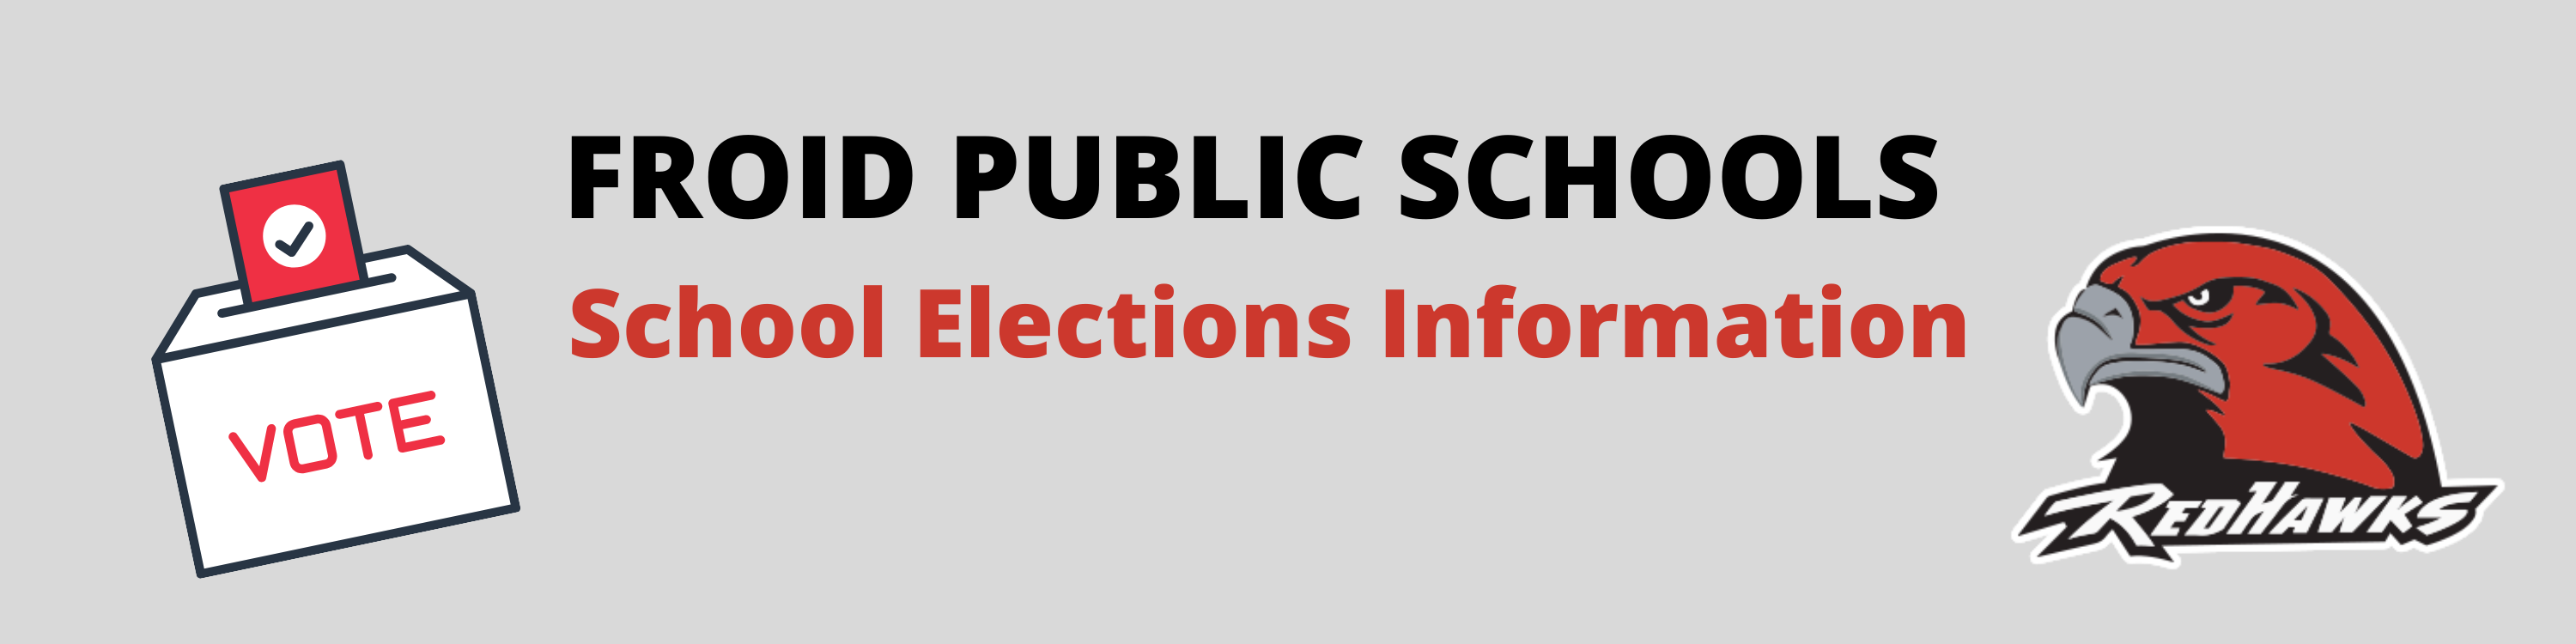 school elections page header